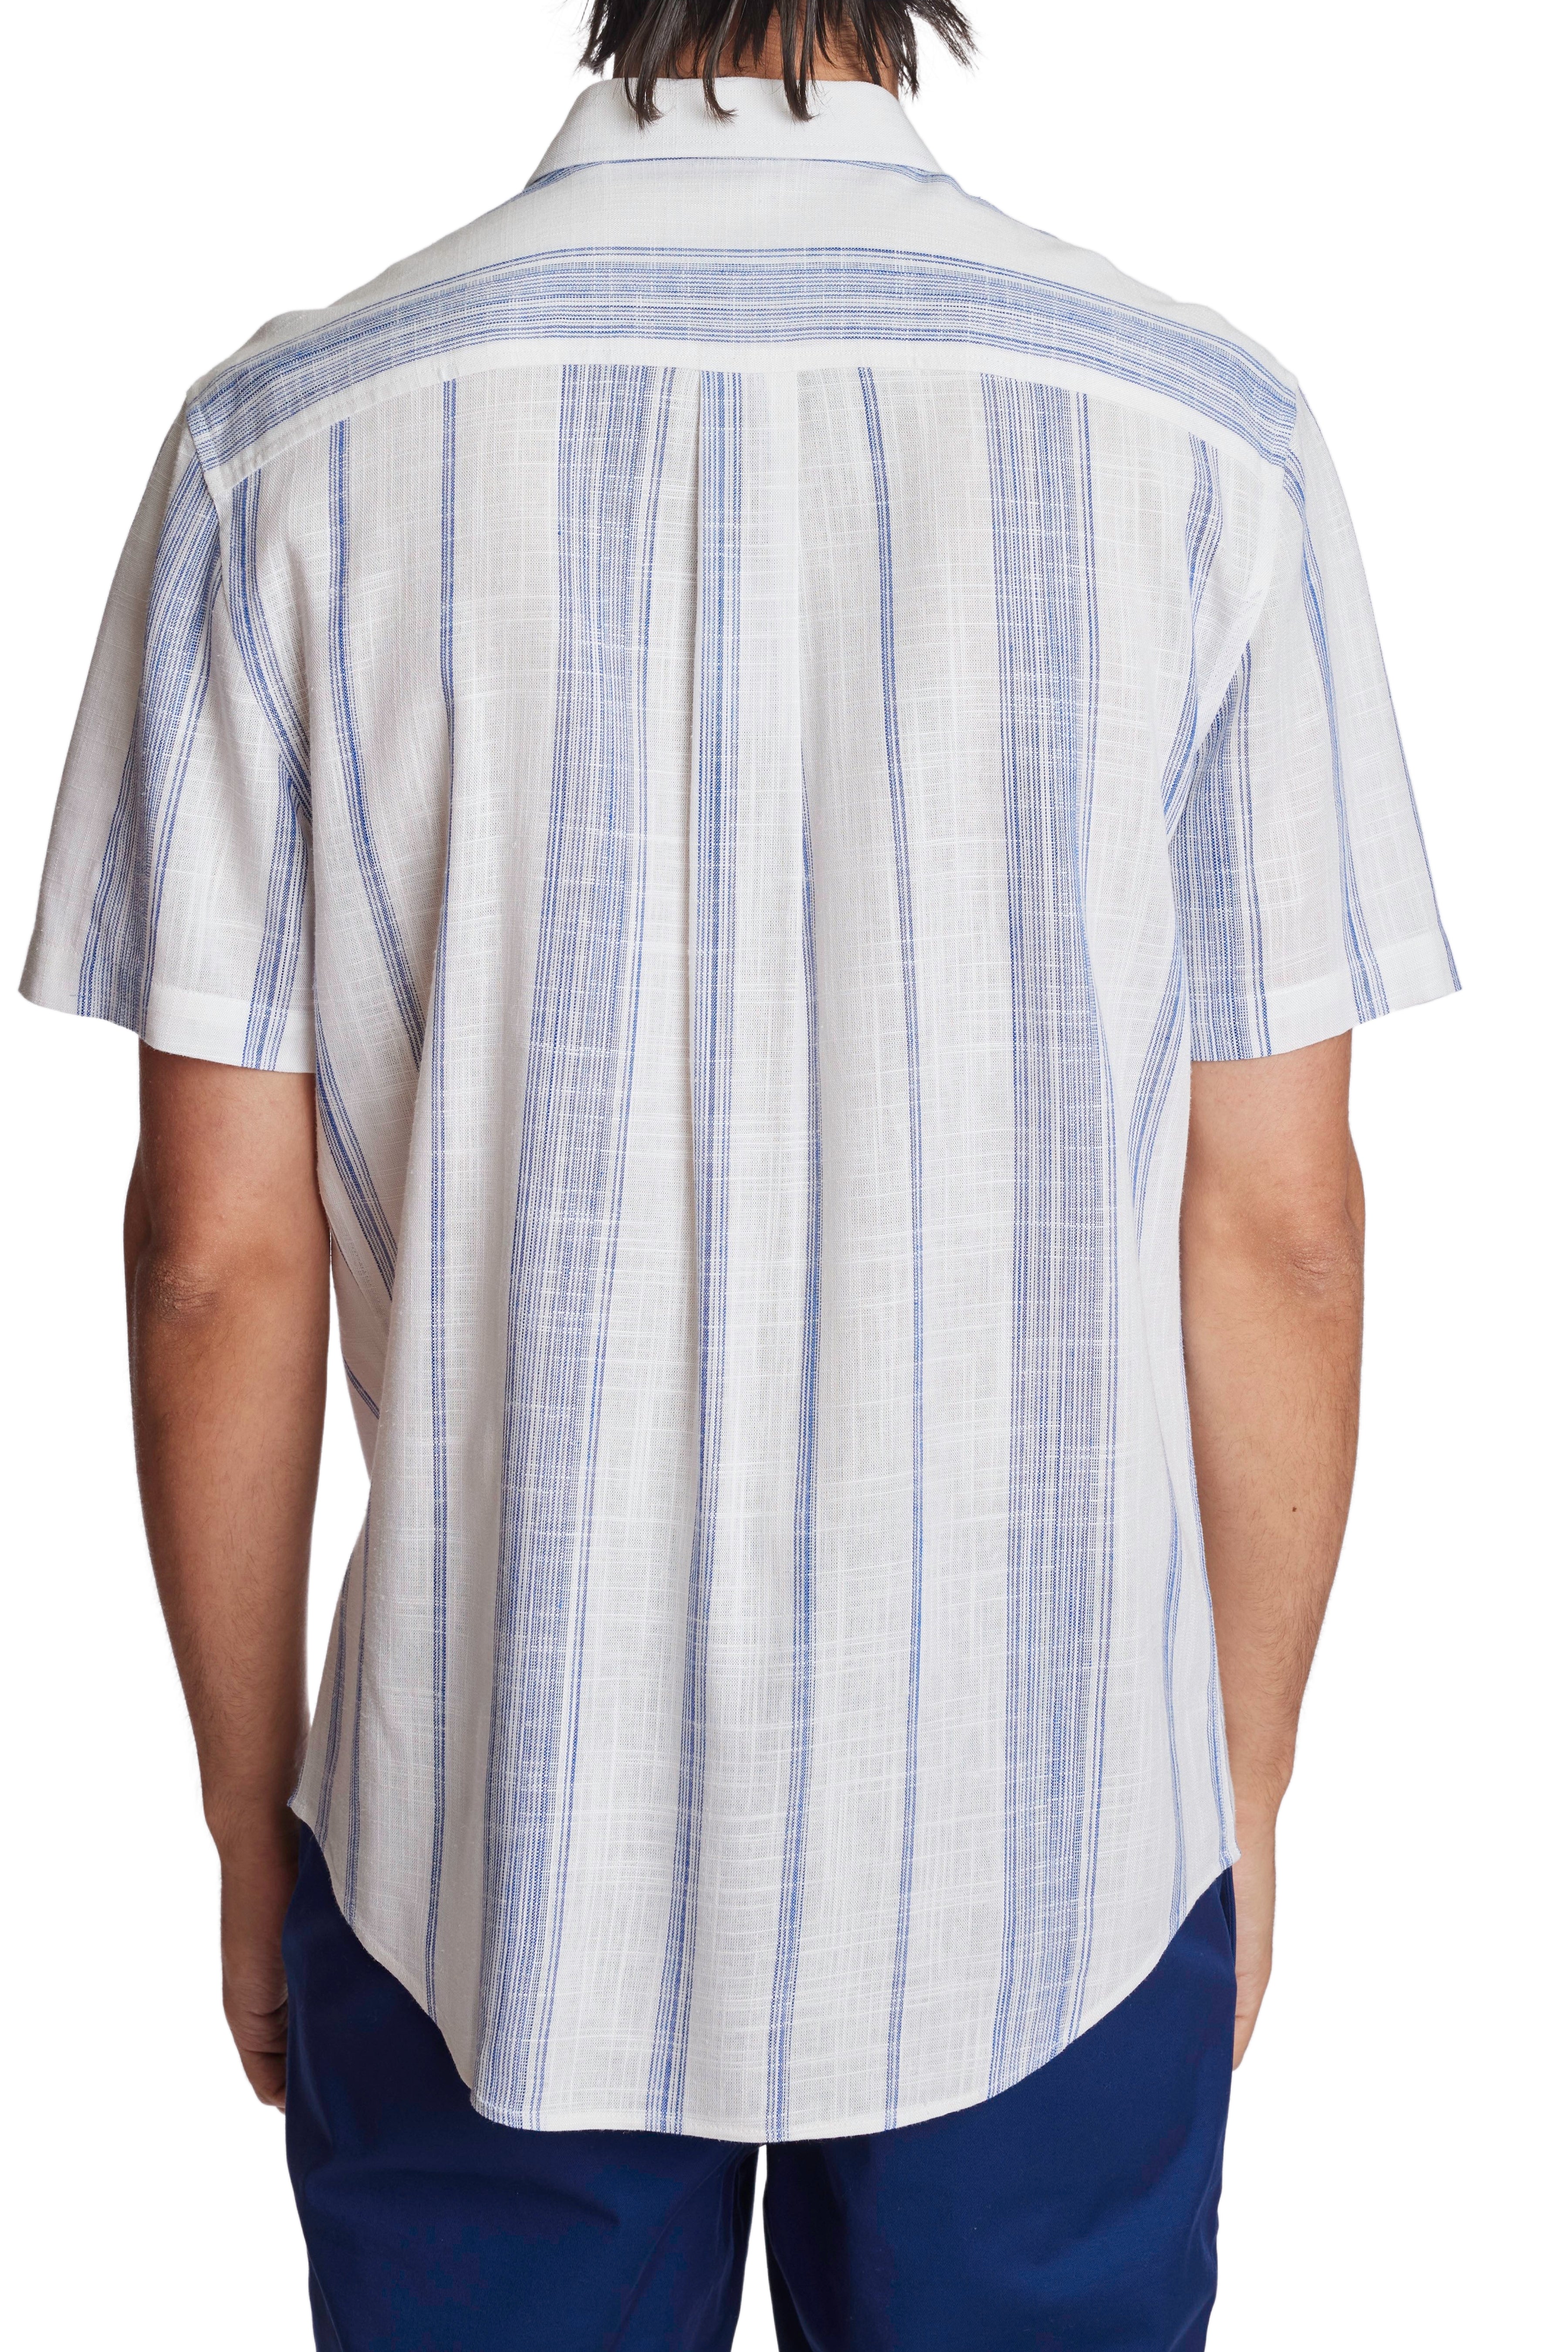 Soleil S/S Shirt - White & Blue Variegated